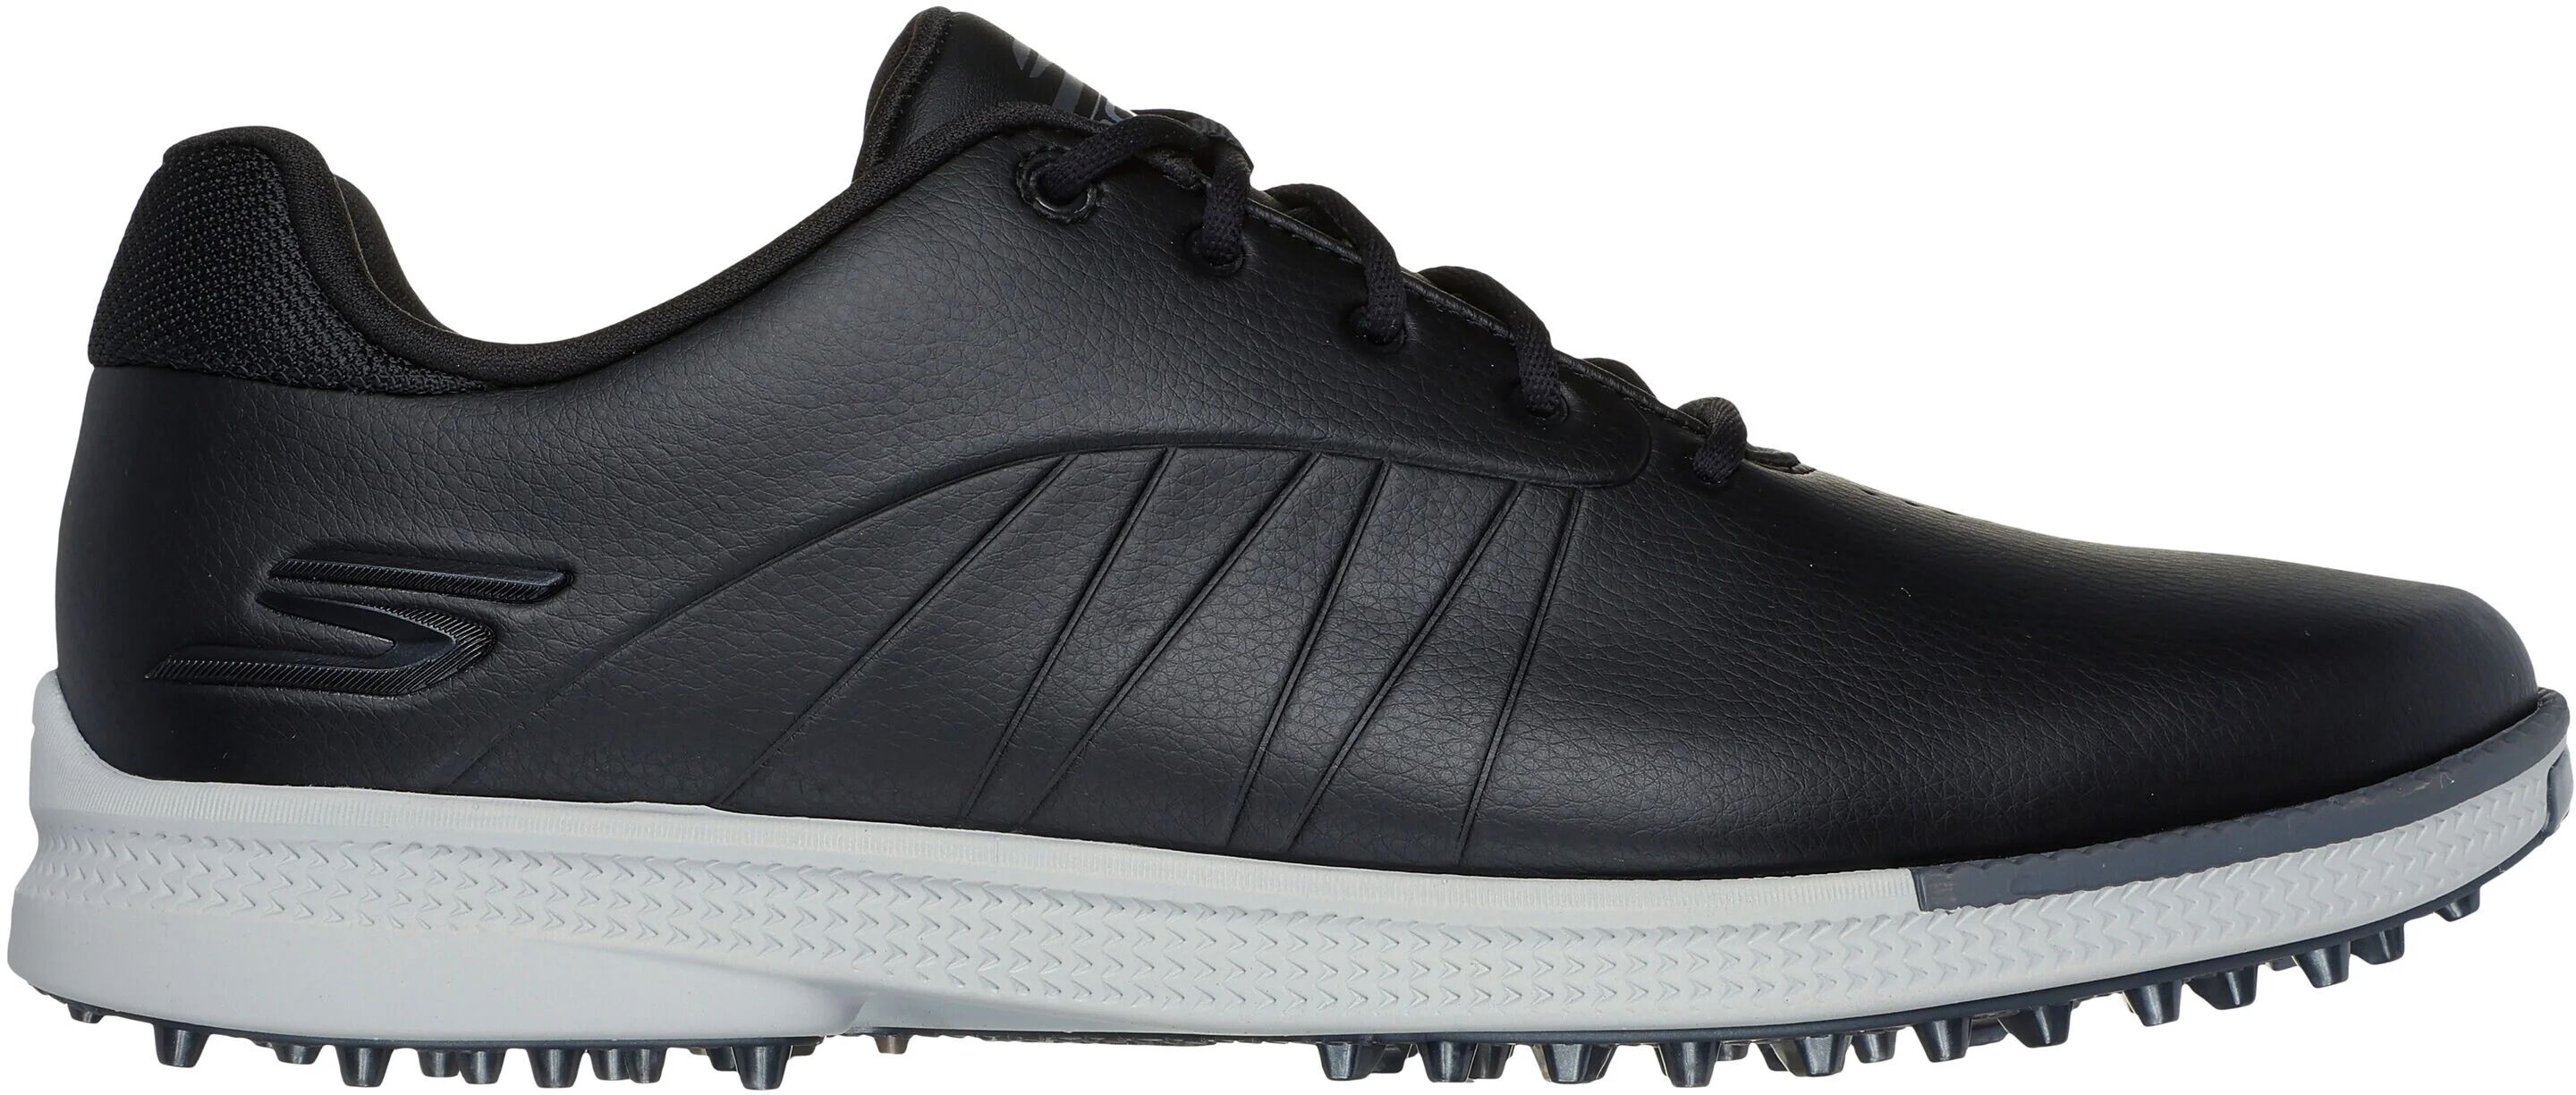 Skechers GO GOLF Tempo GF Golf Shoes - Black/Gray - 8 - MEDIUM